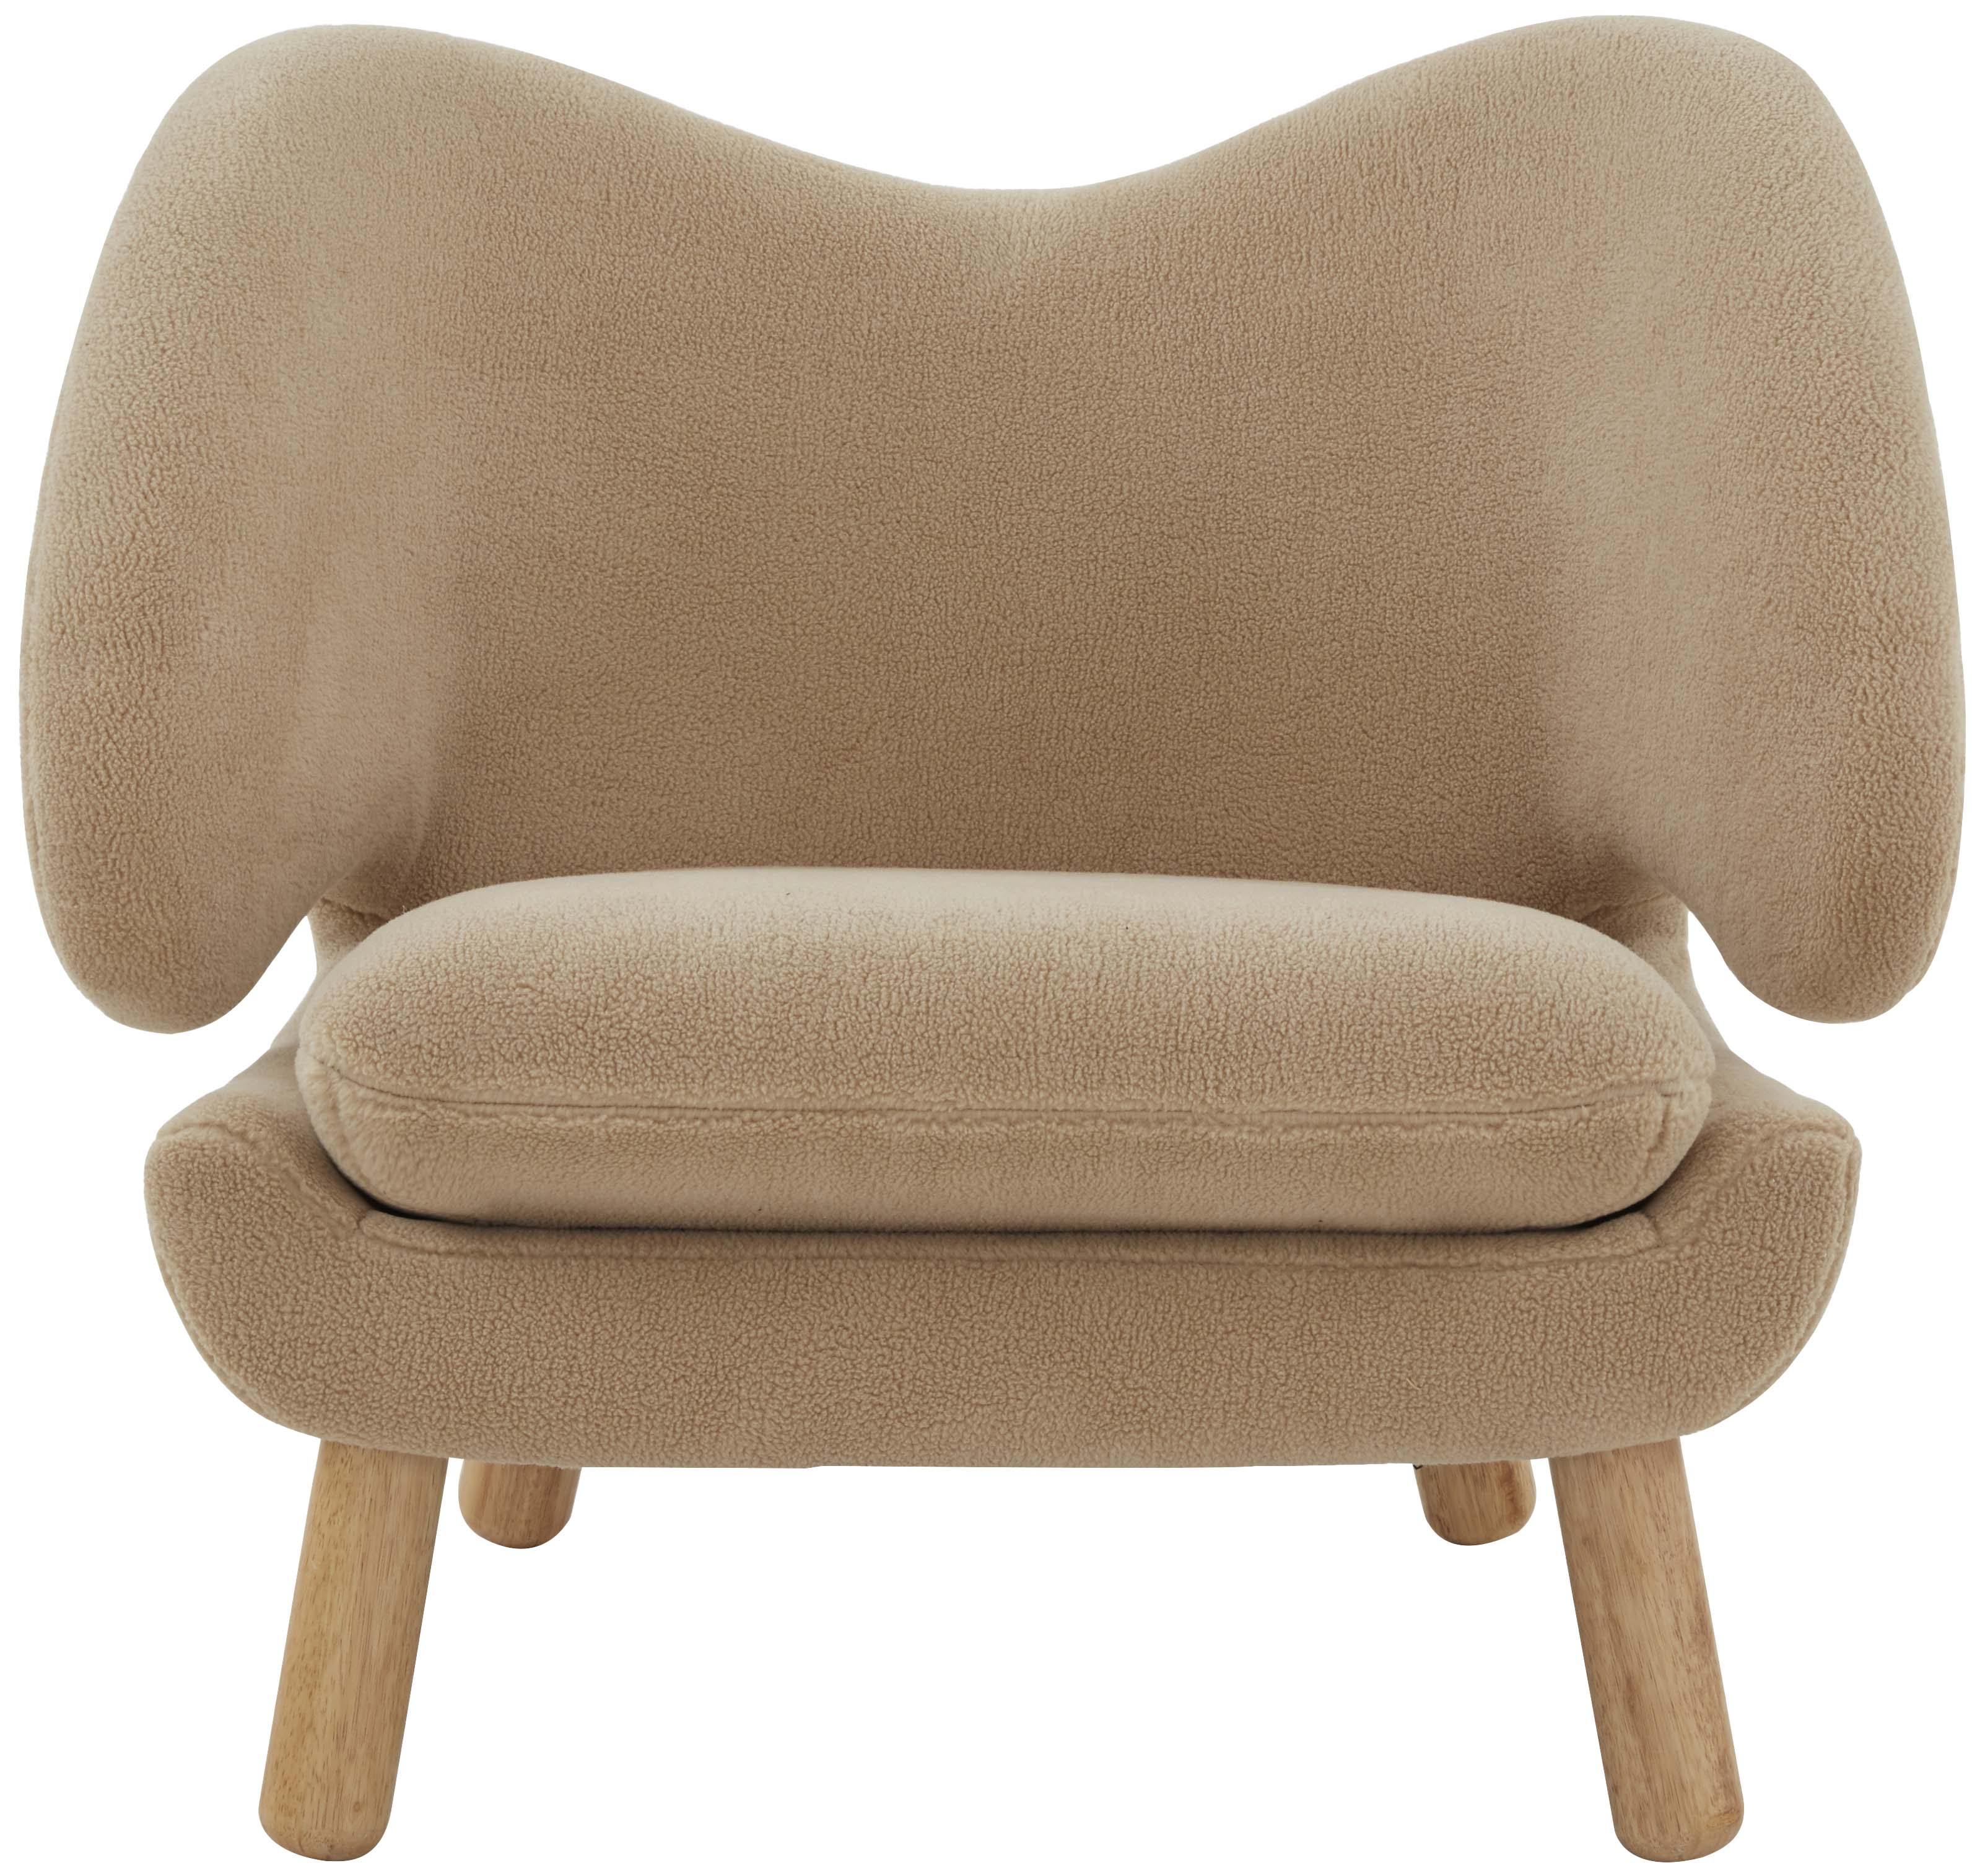 Safavieh Couture Felicia Contemporary Accent Chair - Tan / Natural